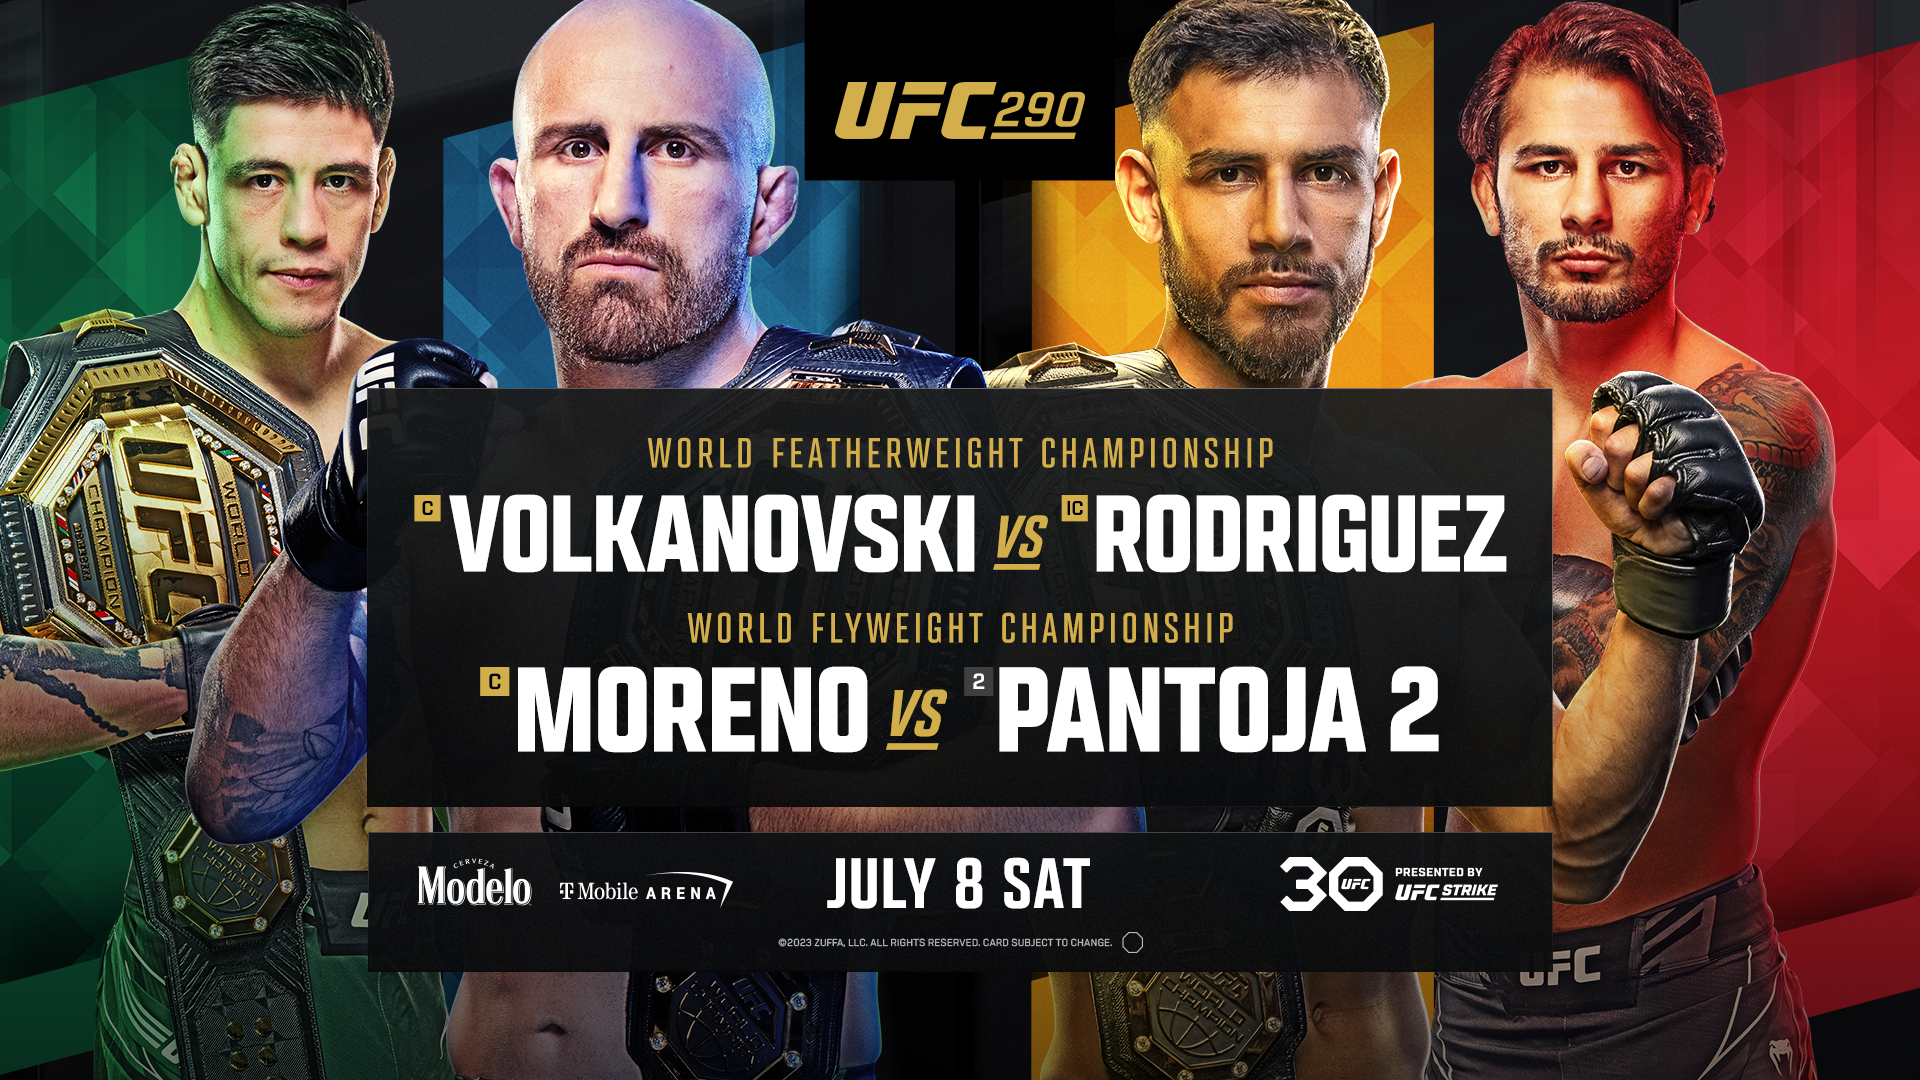 UFC 290 VOLKANOVSKI VS RODRIGUEZ WATCH PARTY AT LIVE!